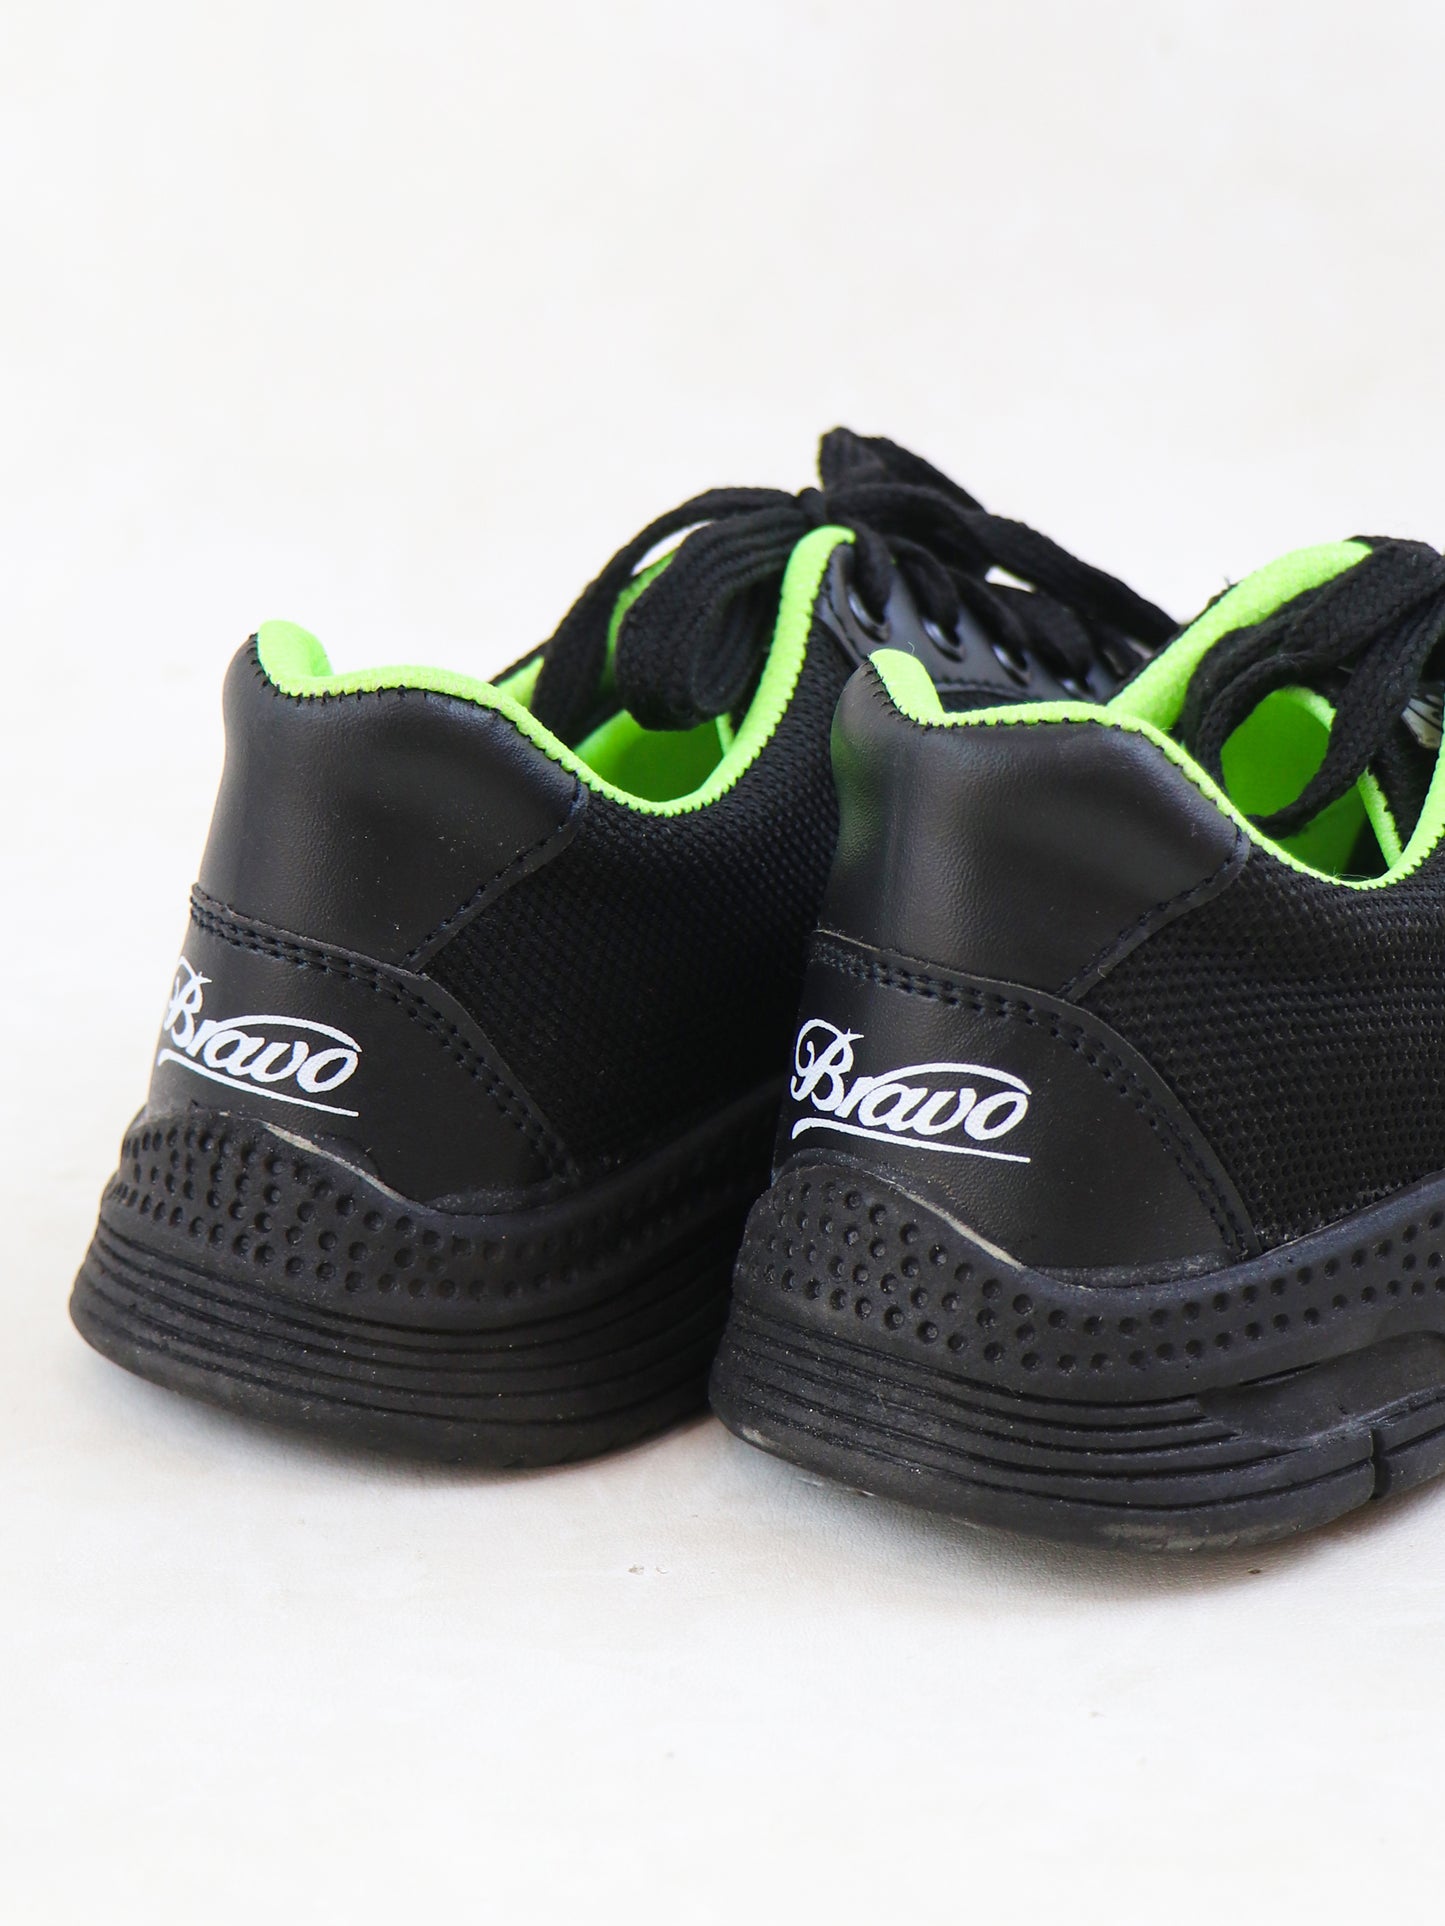 MJS50 Sneakers for Men Black